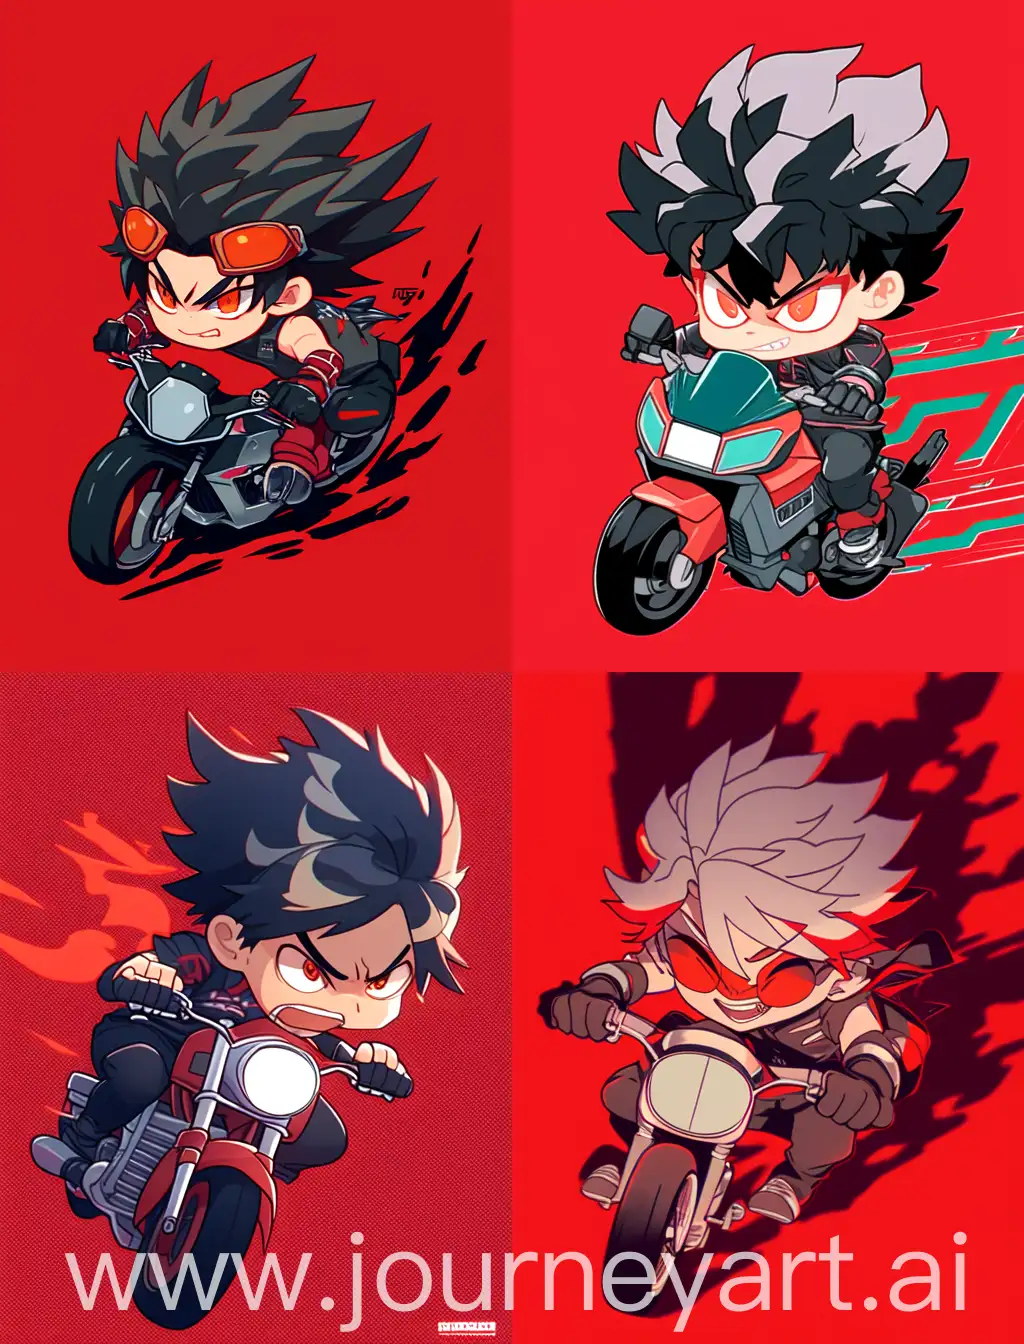 Angry-Chibi-Anime-Guy-Riding-Motorcycle-Cartoon-Anime-Style